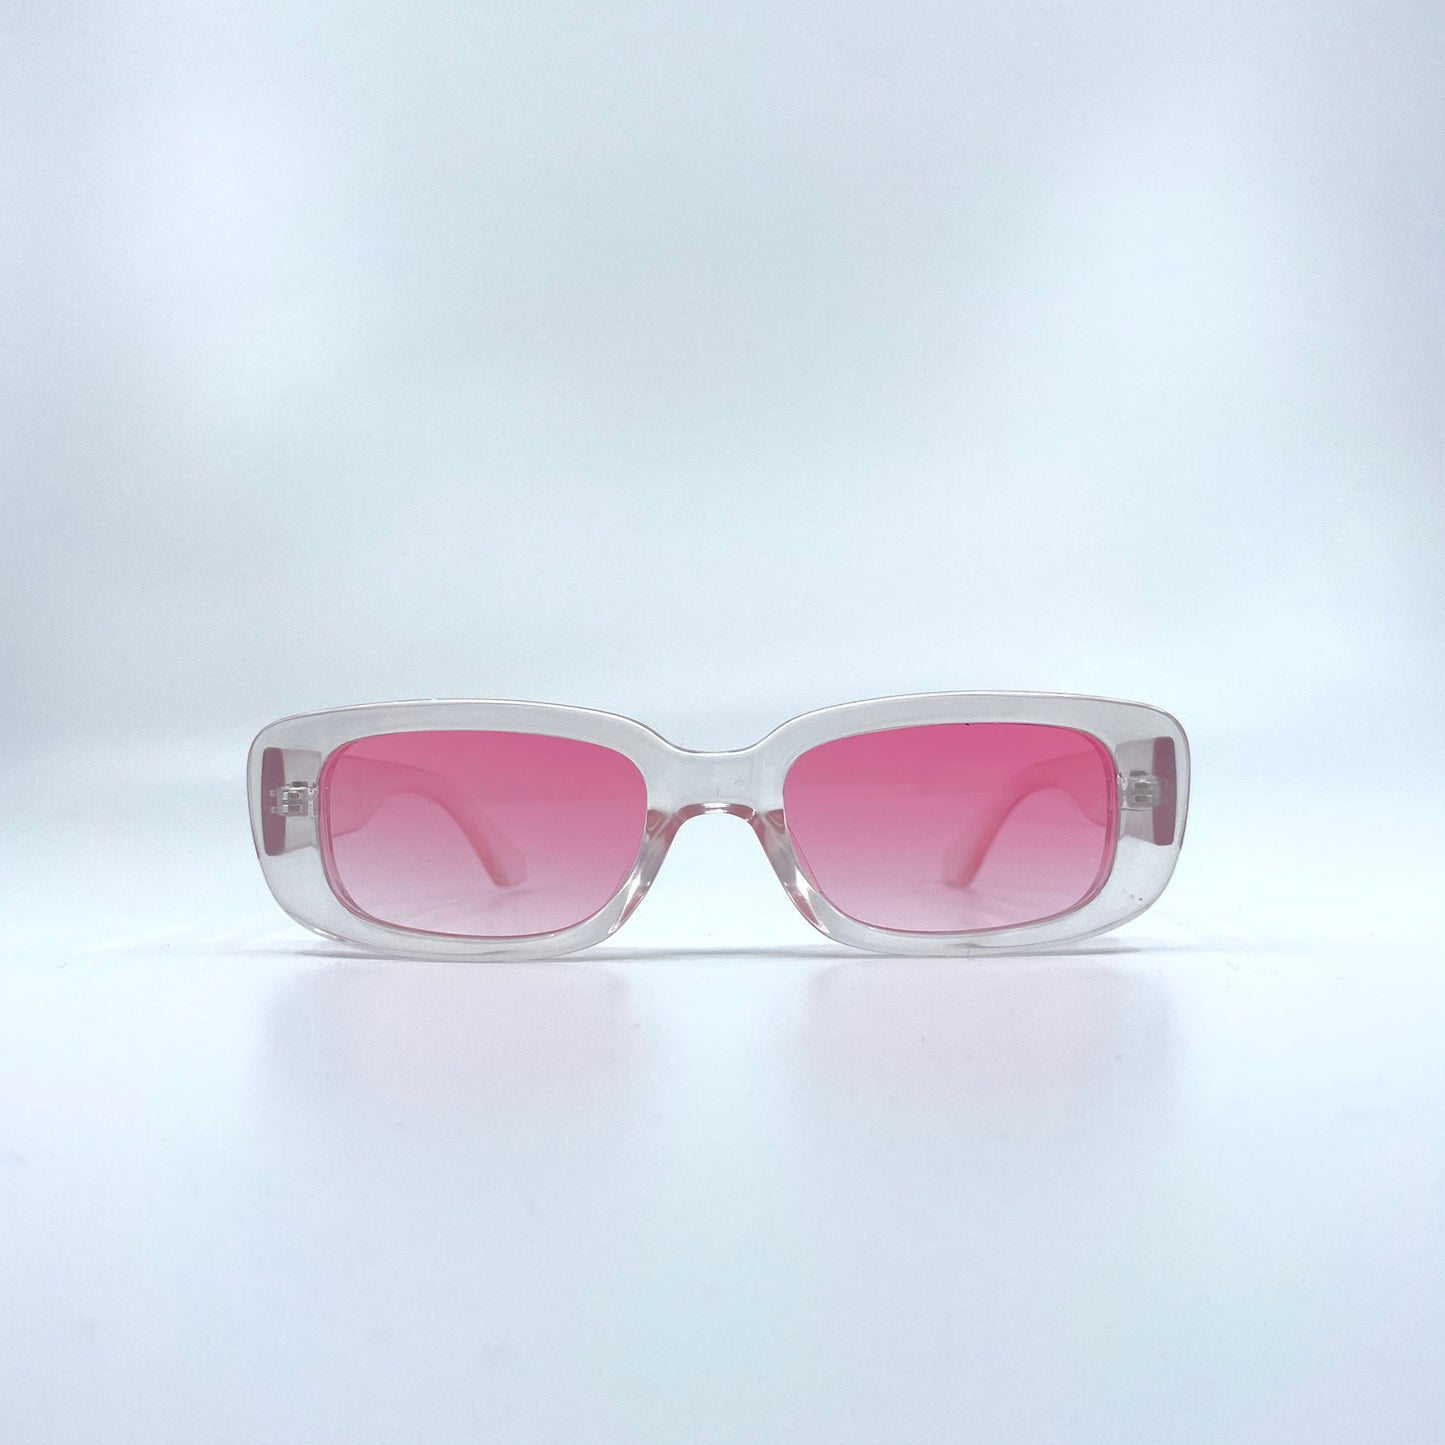 “Los Feliz” Sunglasses